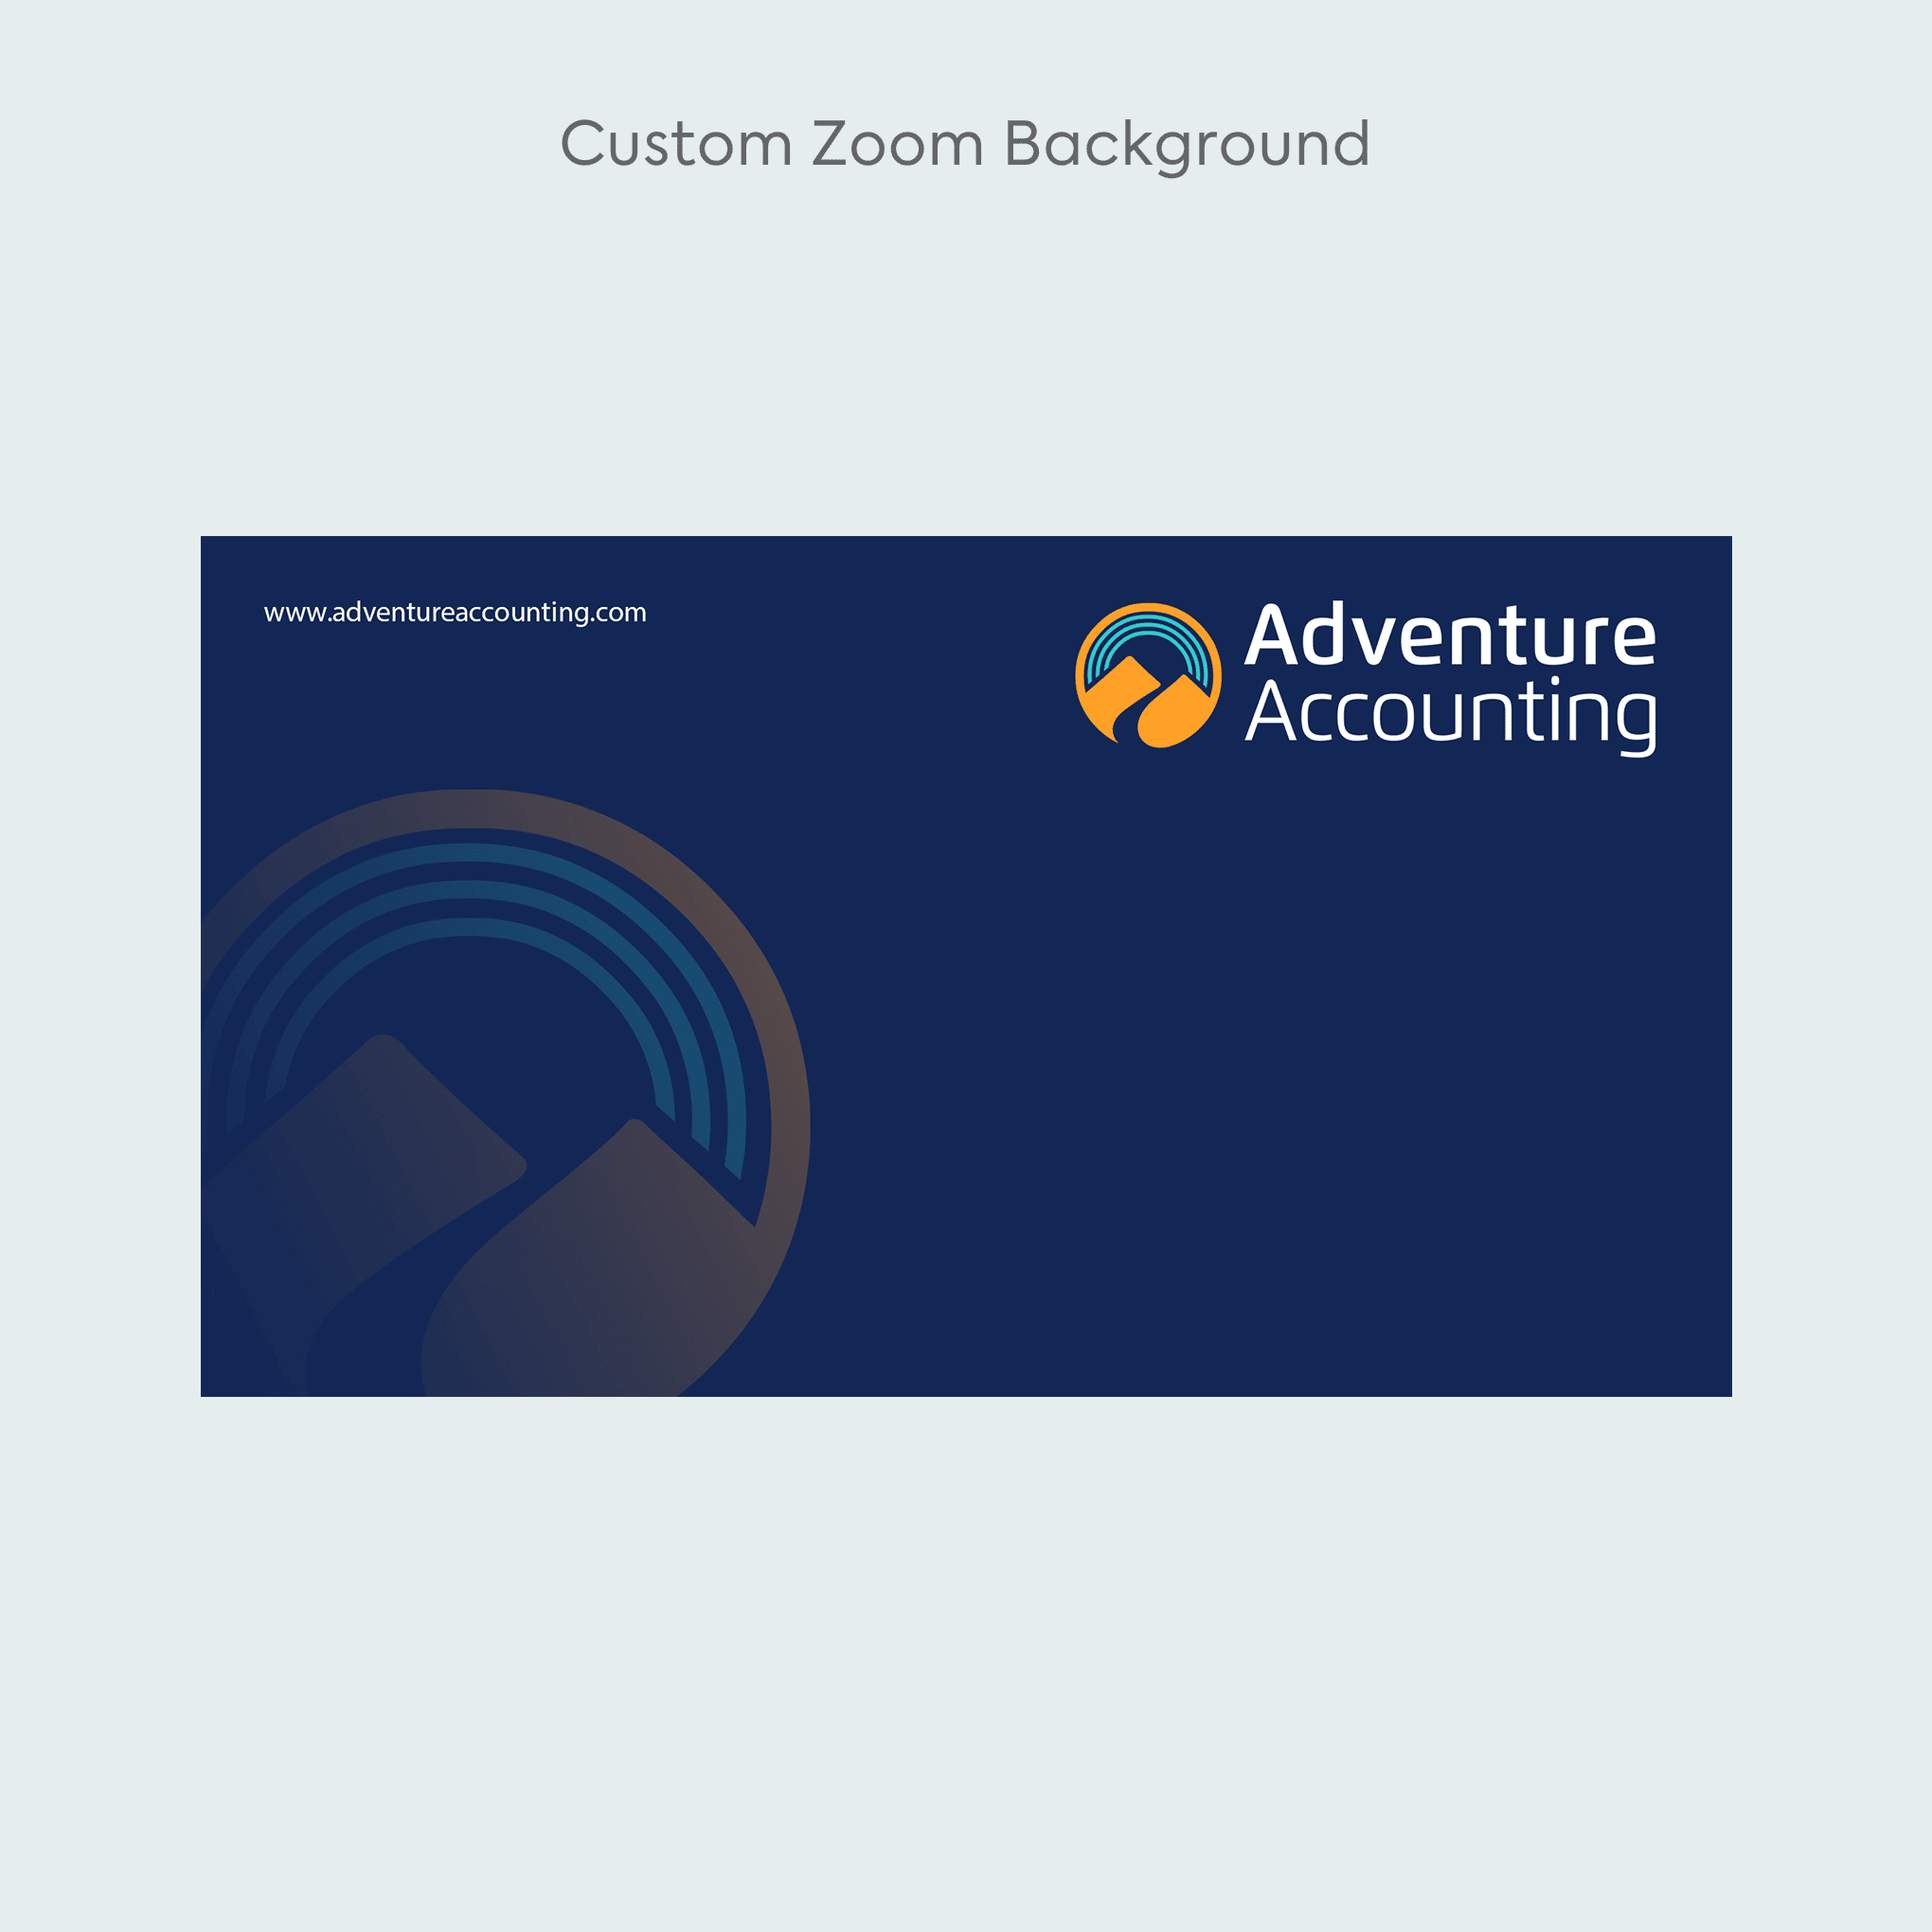 07 - Custom Zoom Background (5)